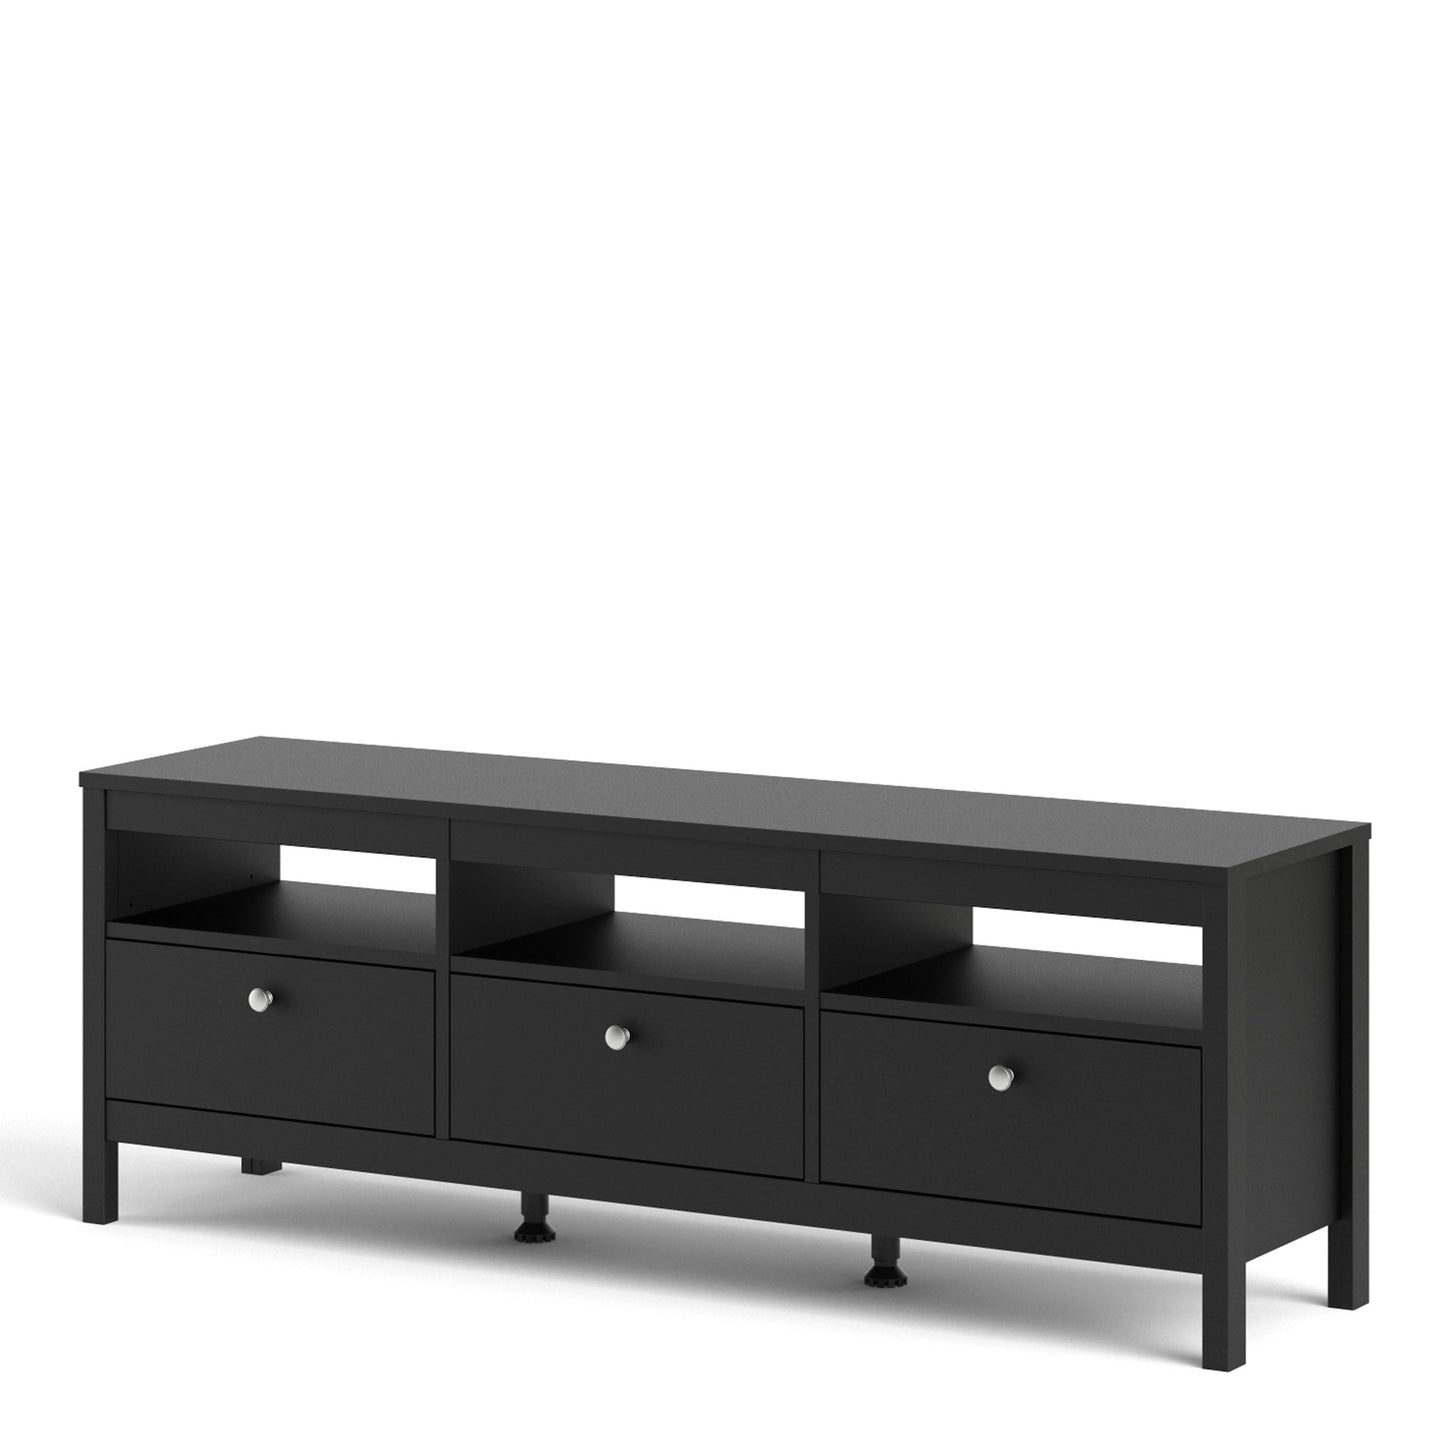 Furniture To Go Madrid TV-Unit 3 Drawers in Matt Black